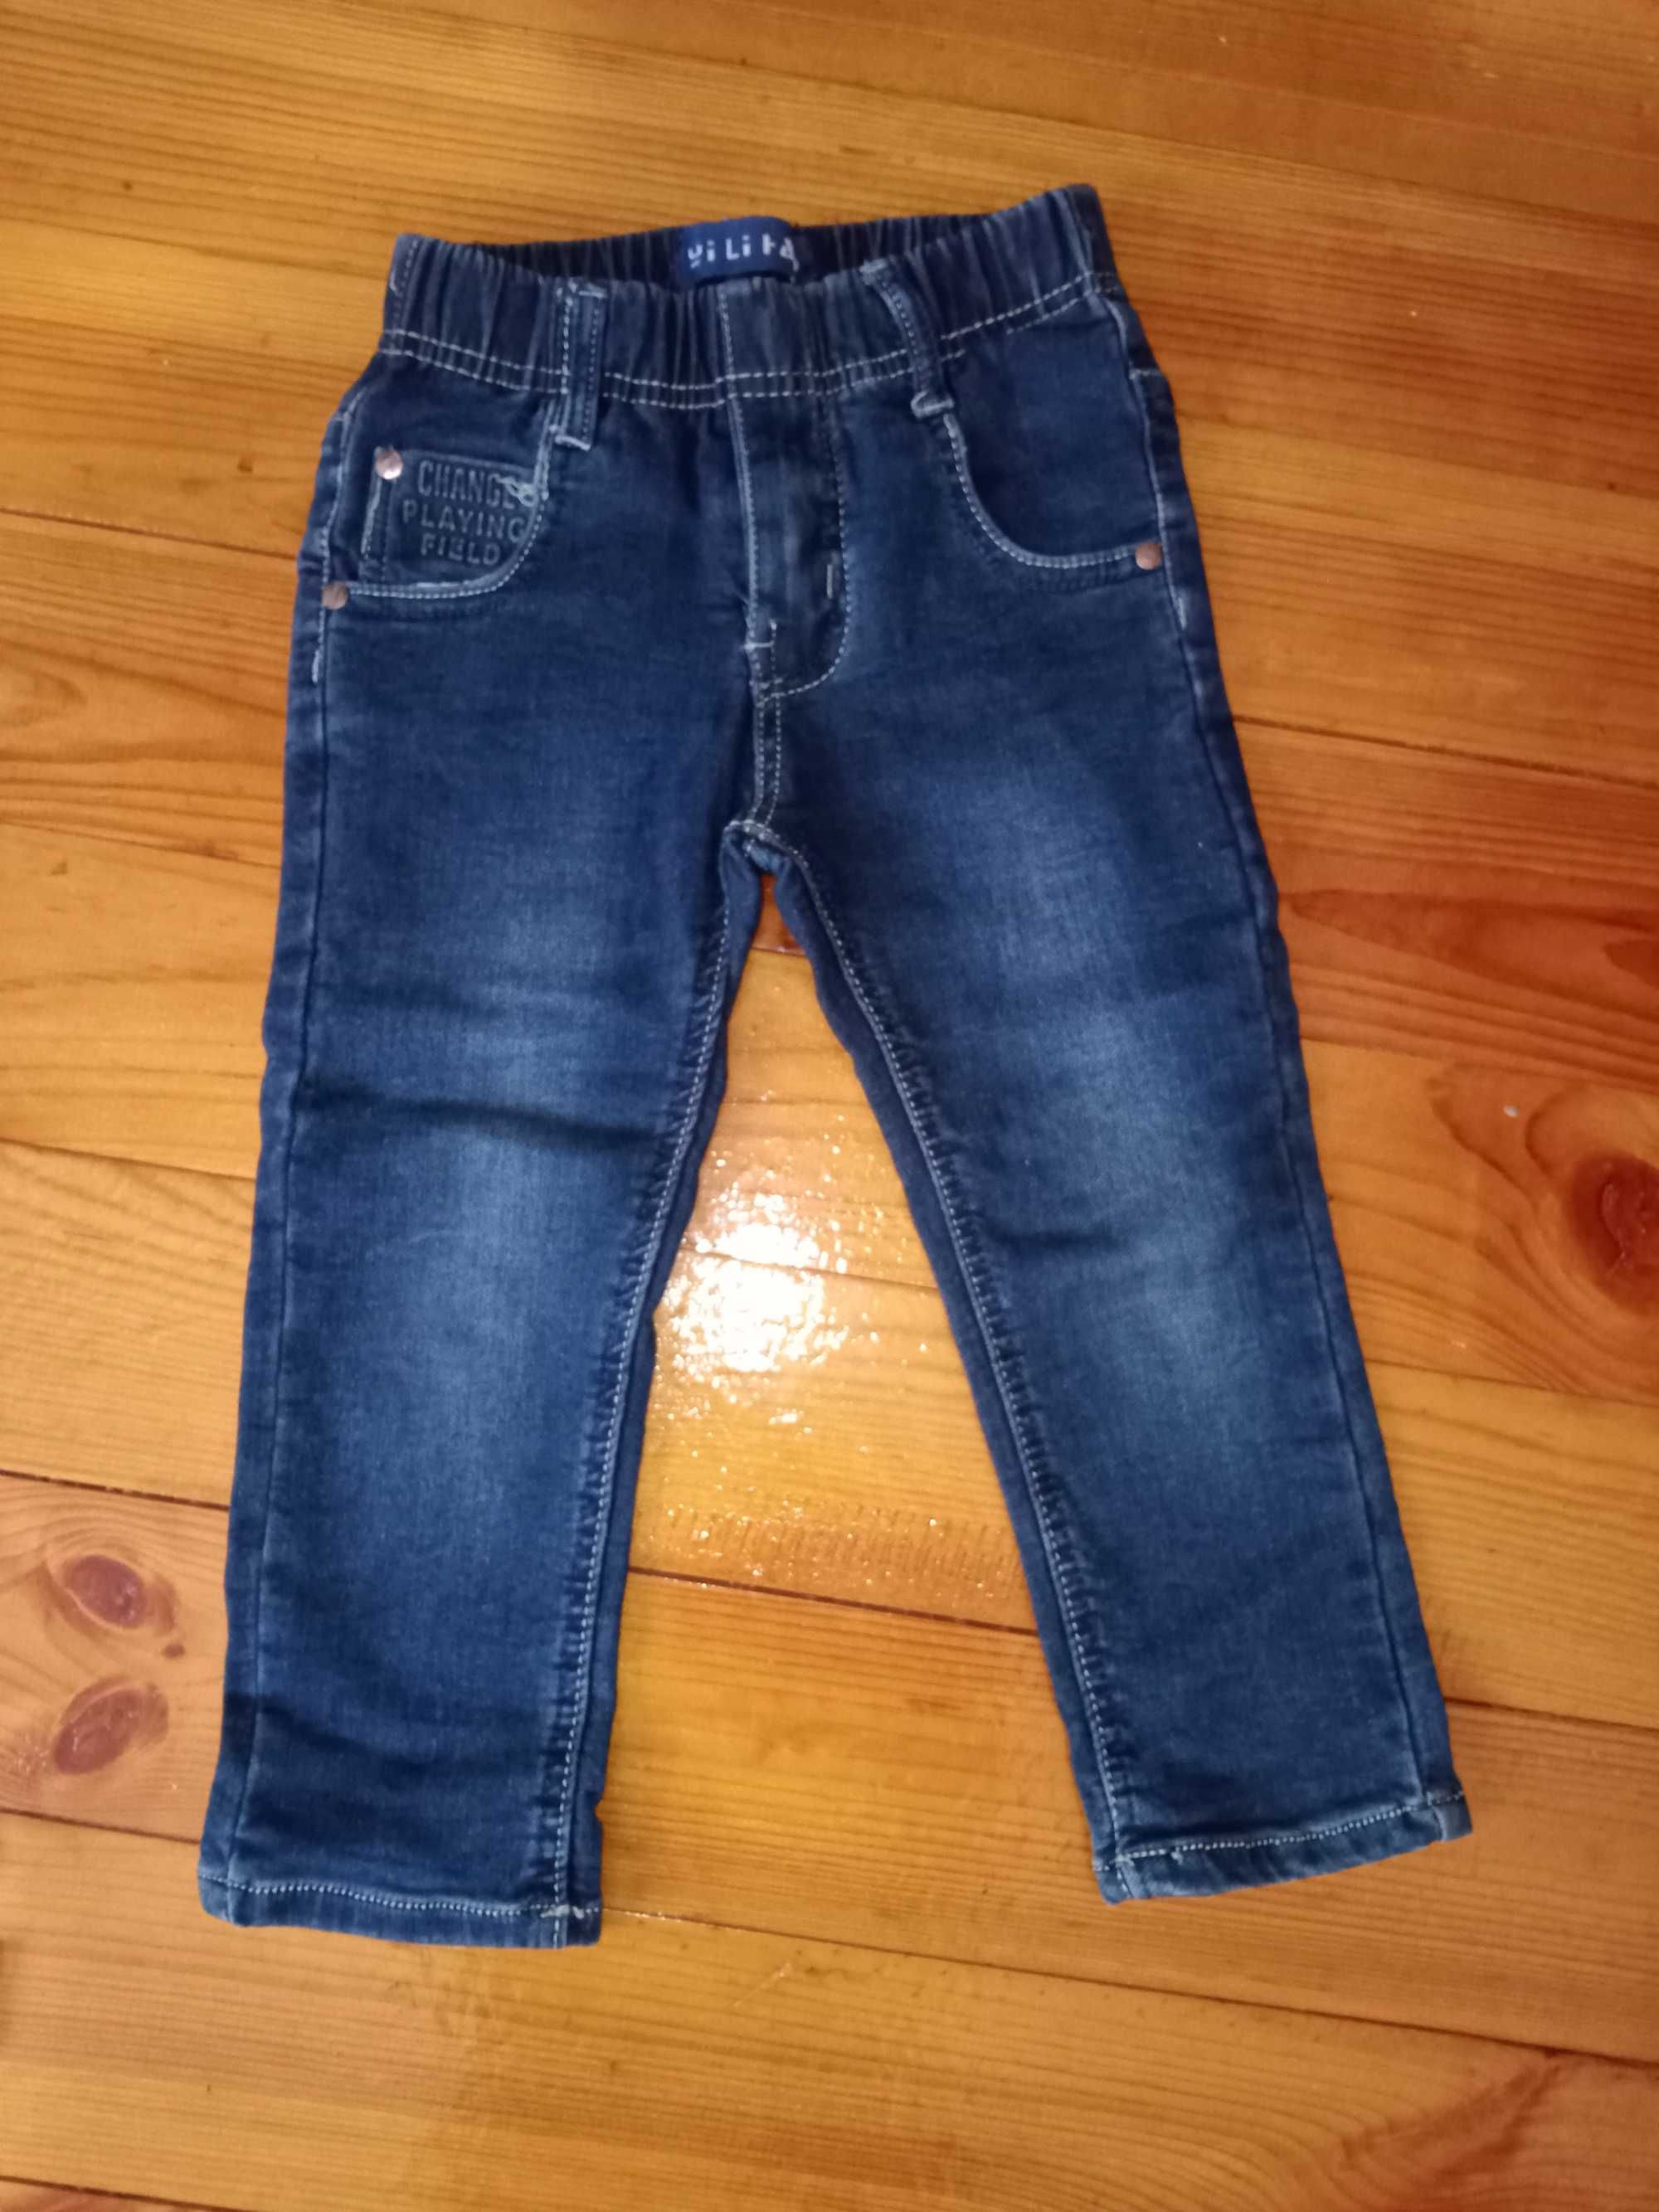 2 джинсових штанів дитячих за 100 грн